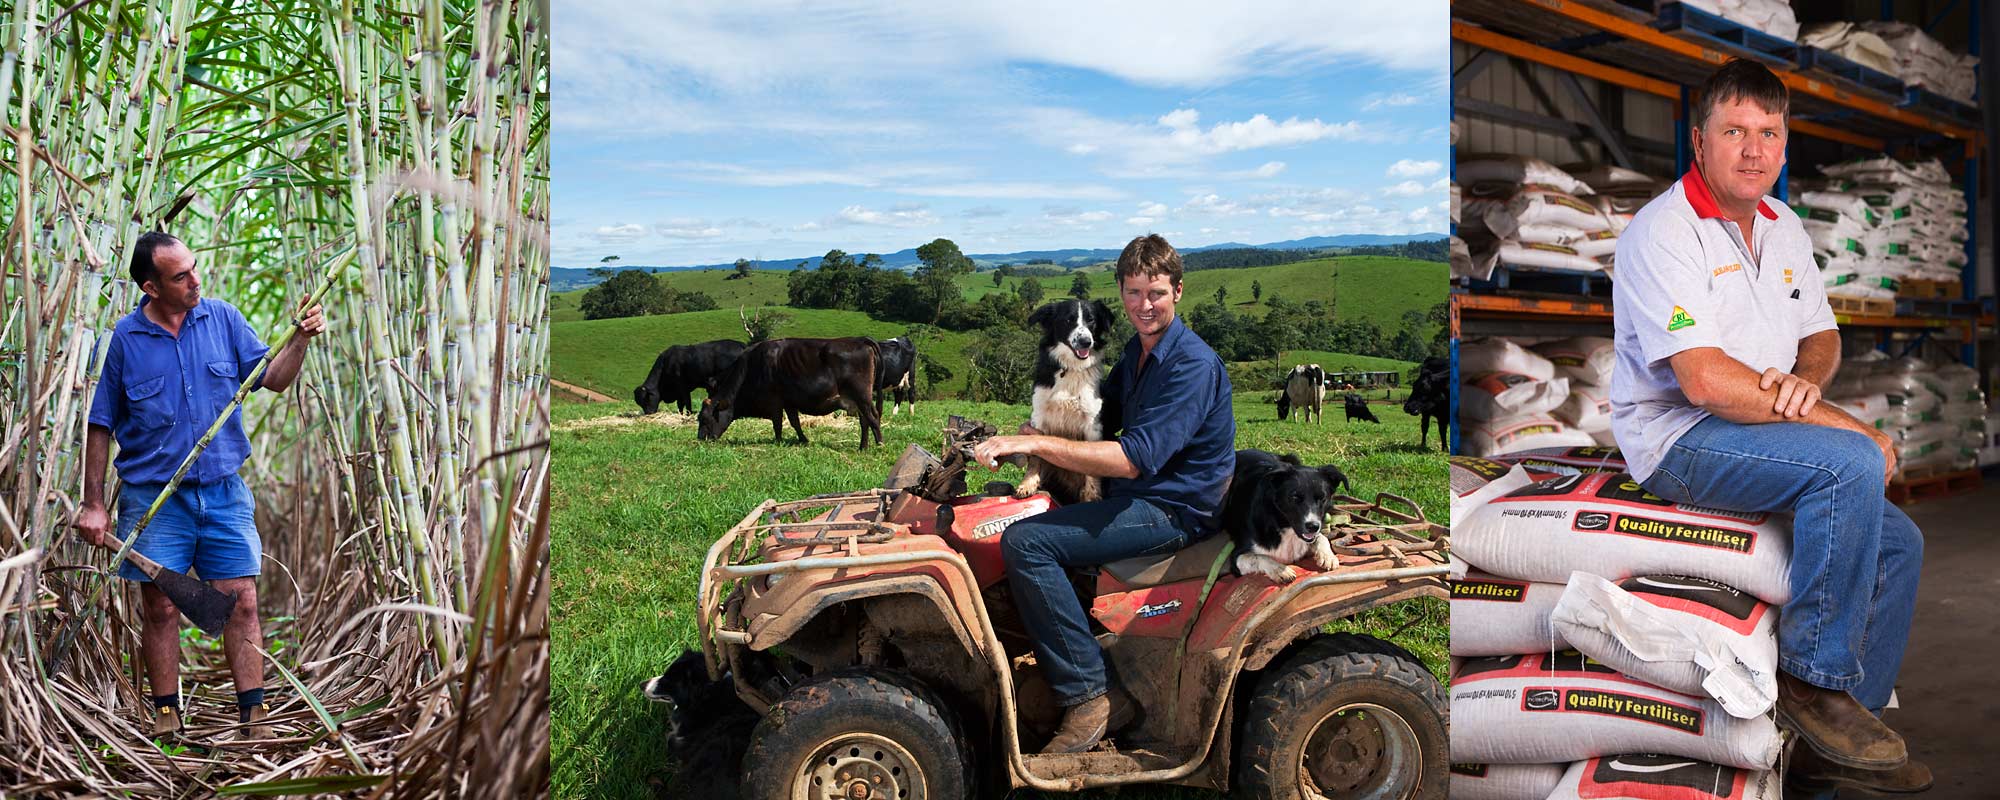 Editorial Portrait Photography - Farmer in the Far North